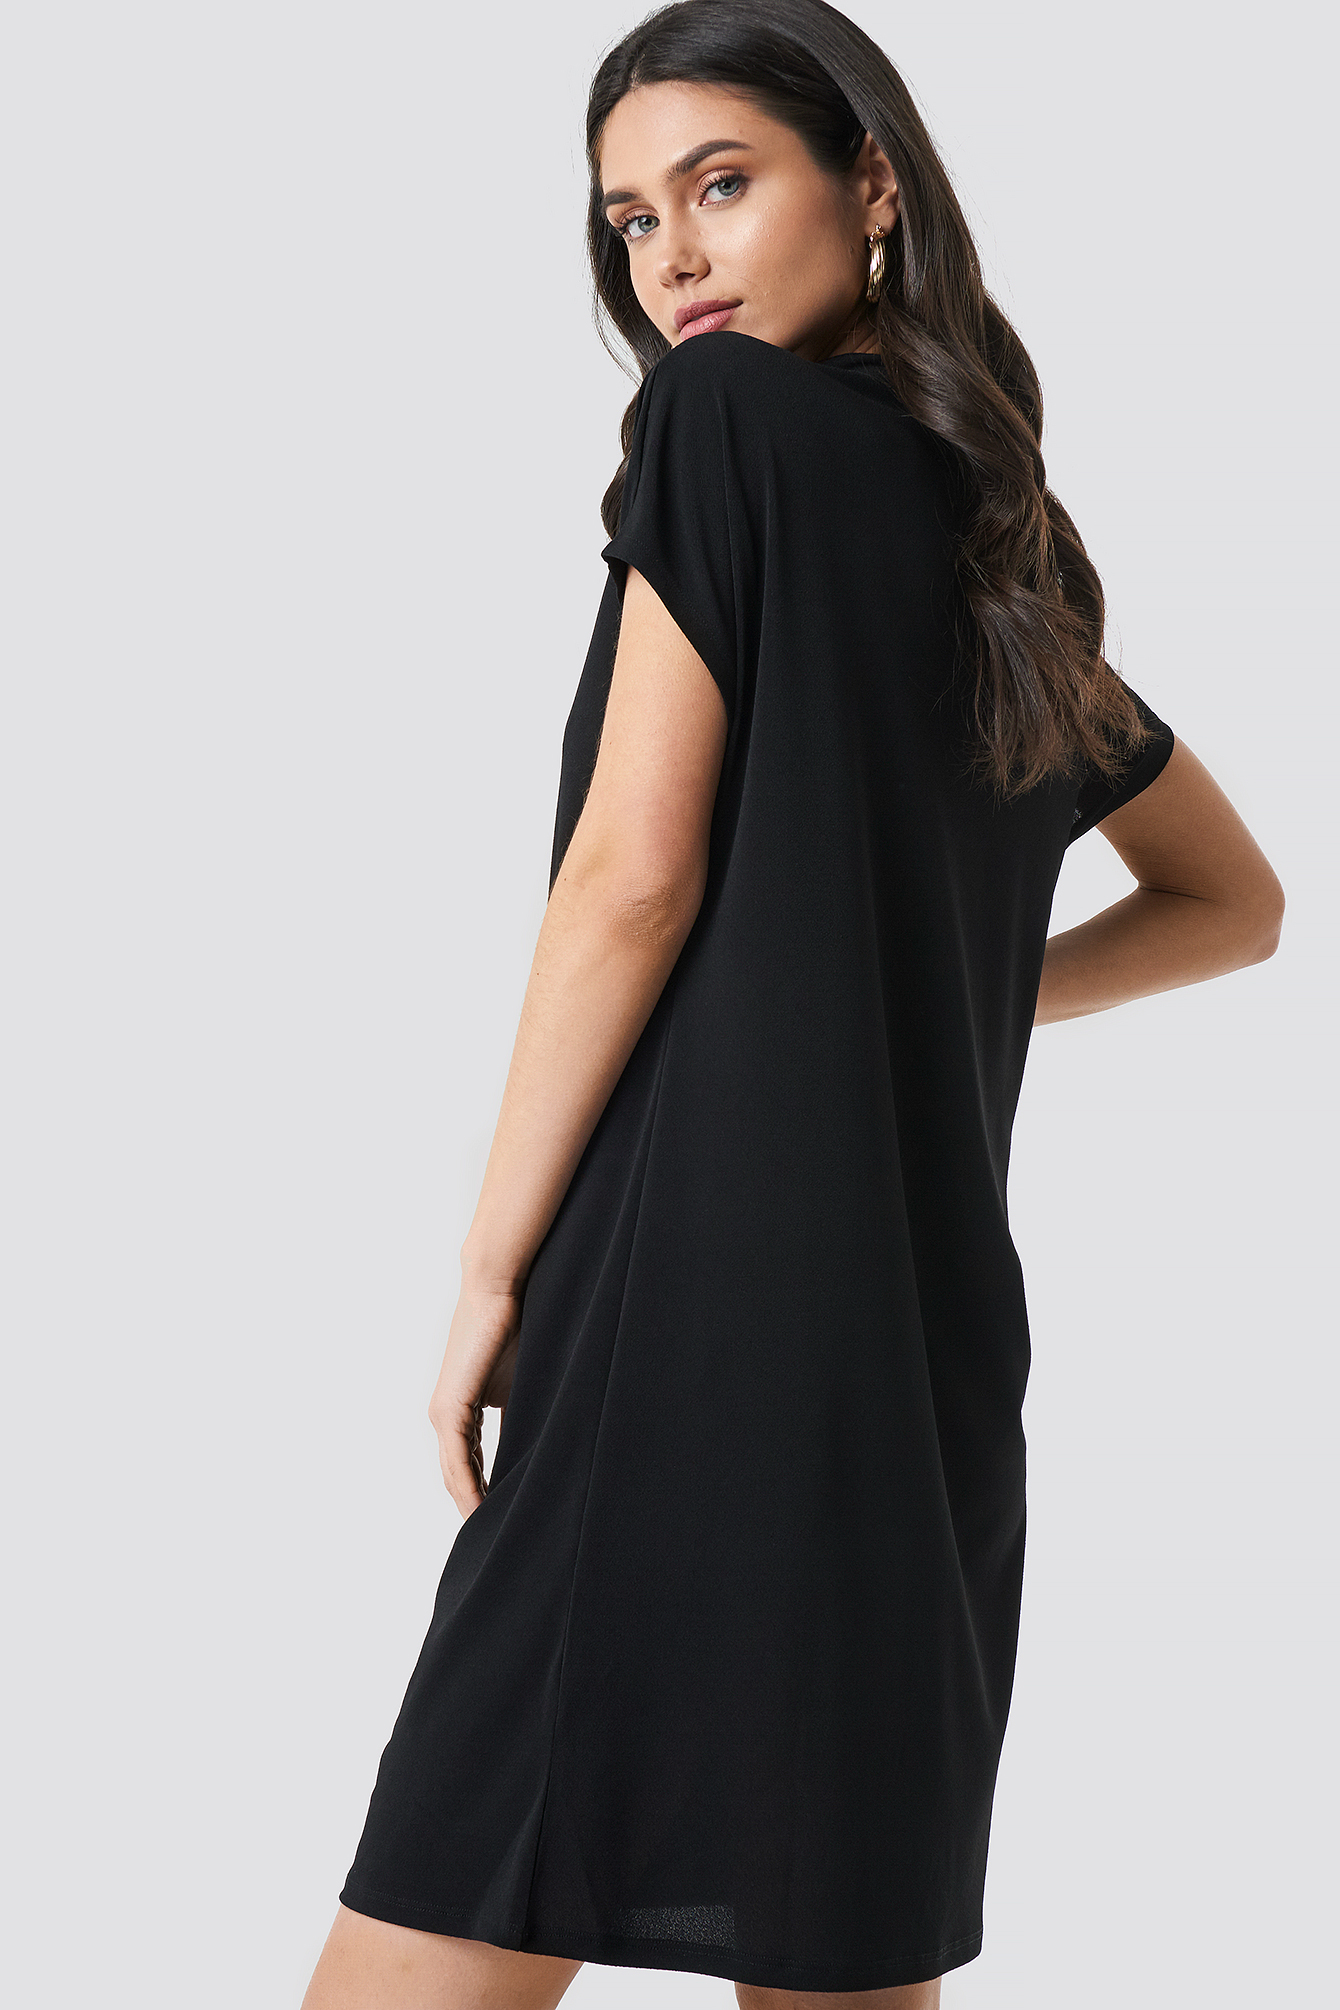 Black Jersey Cap Sleeve Dress